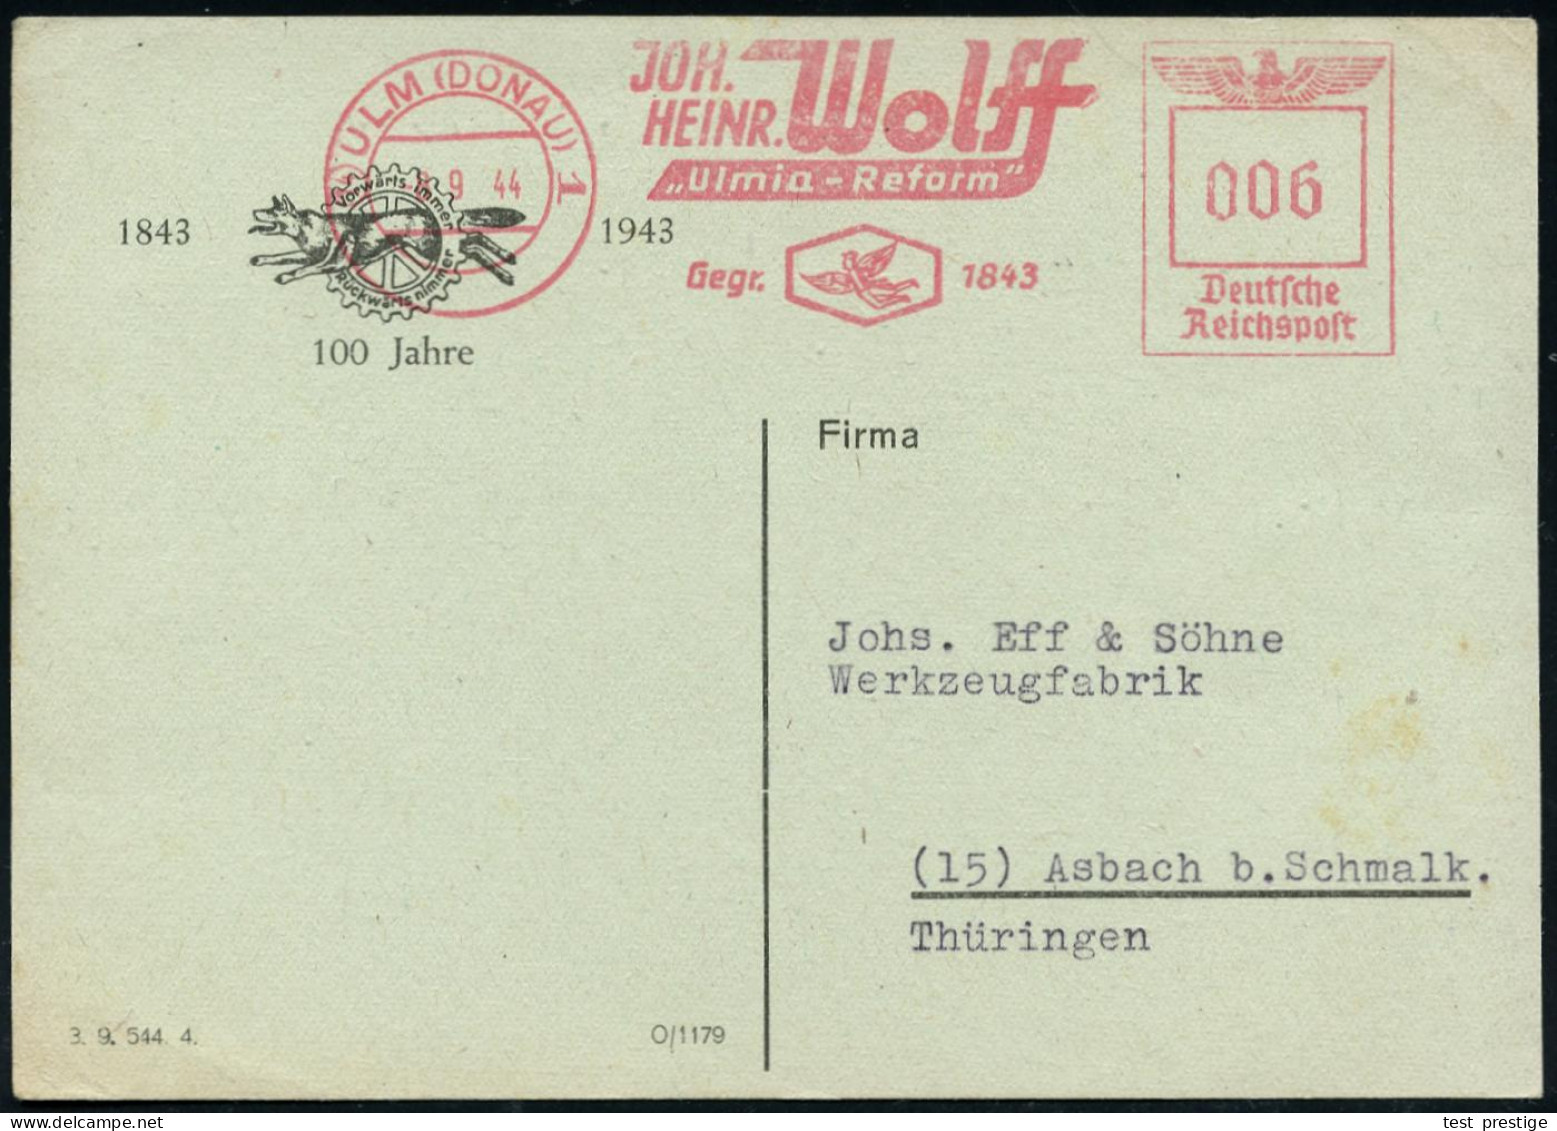 (14) ULM (DONAU) 1/ JOH./ HEINR. Wolff/ "Ulmer-Reform"/ Gegr.1843 1944 (8.9.) Seltener AFS Francotyp Mit Postleitzahl != - Otros (Aire)